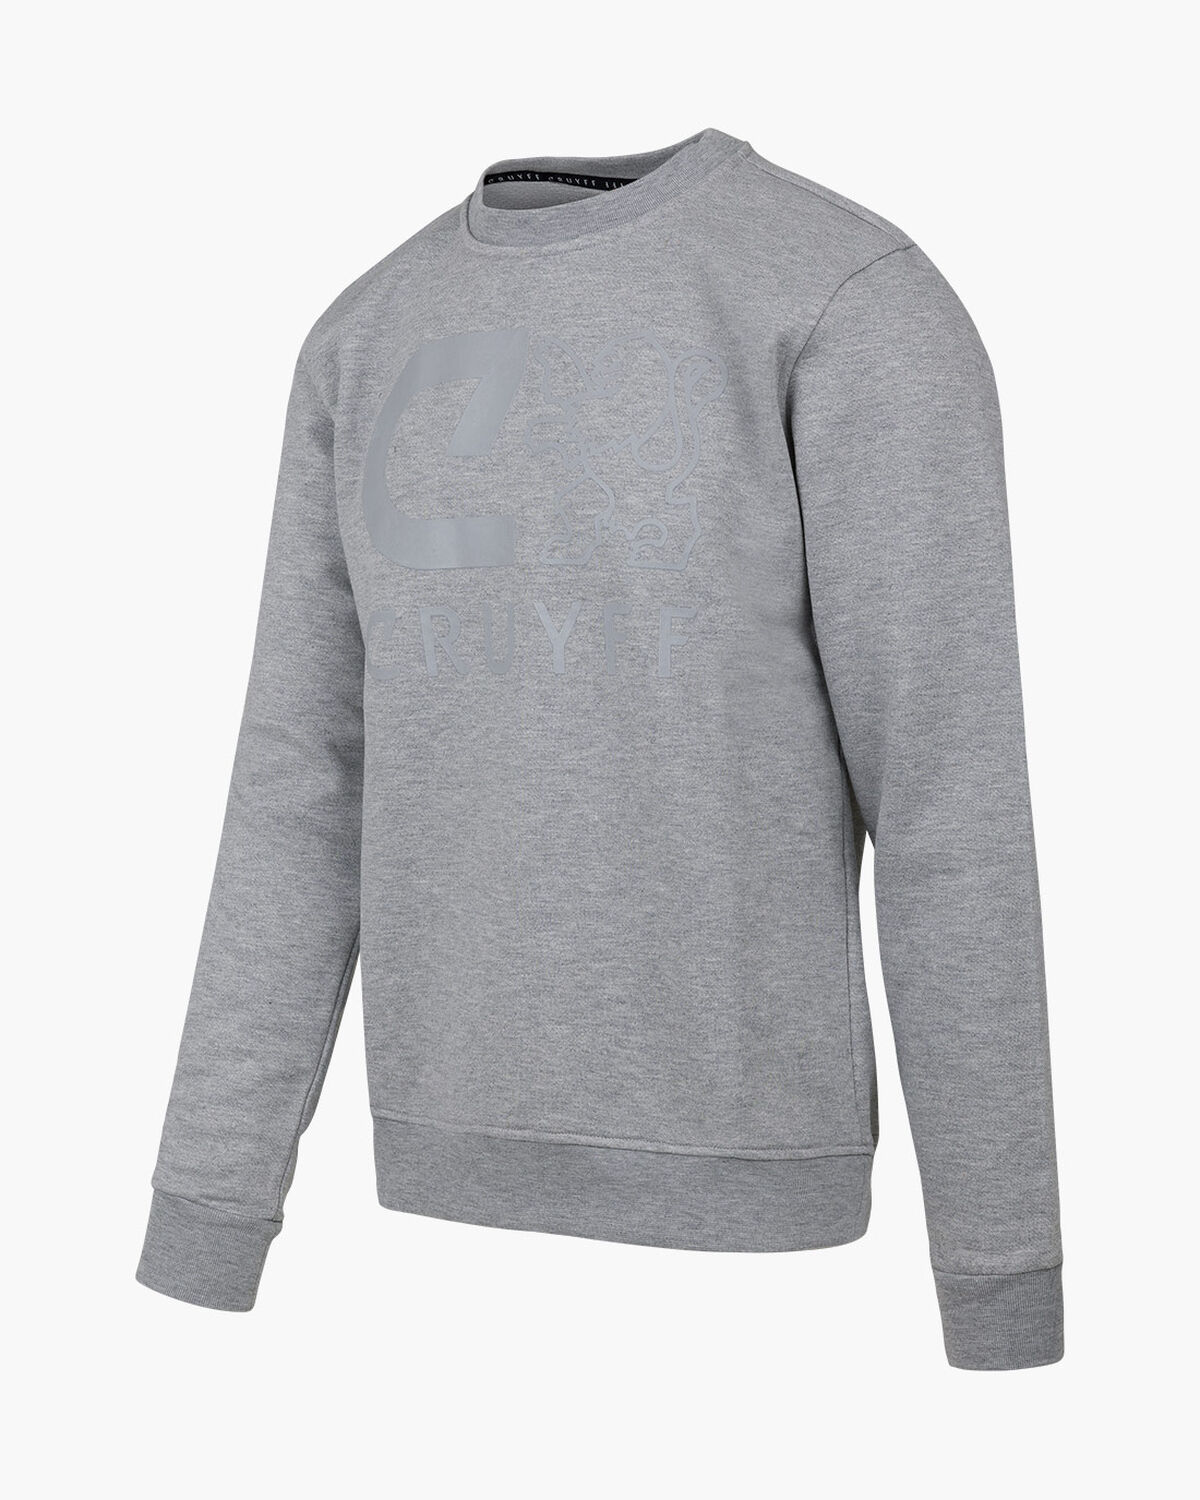 Hernandez Sweater, Grey, hi-res